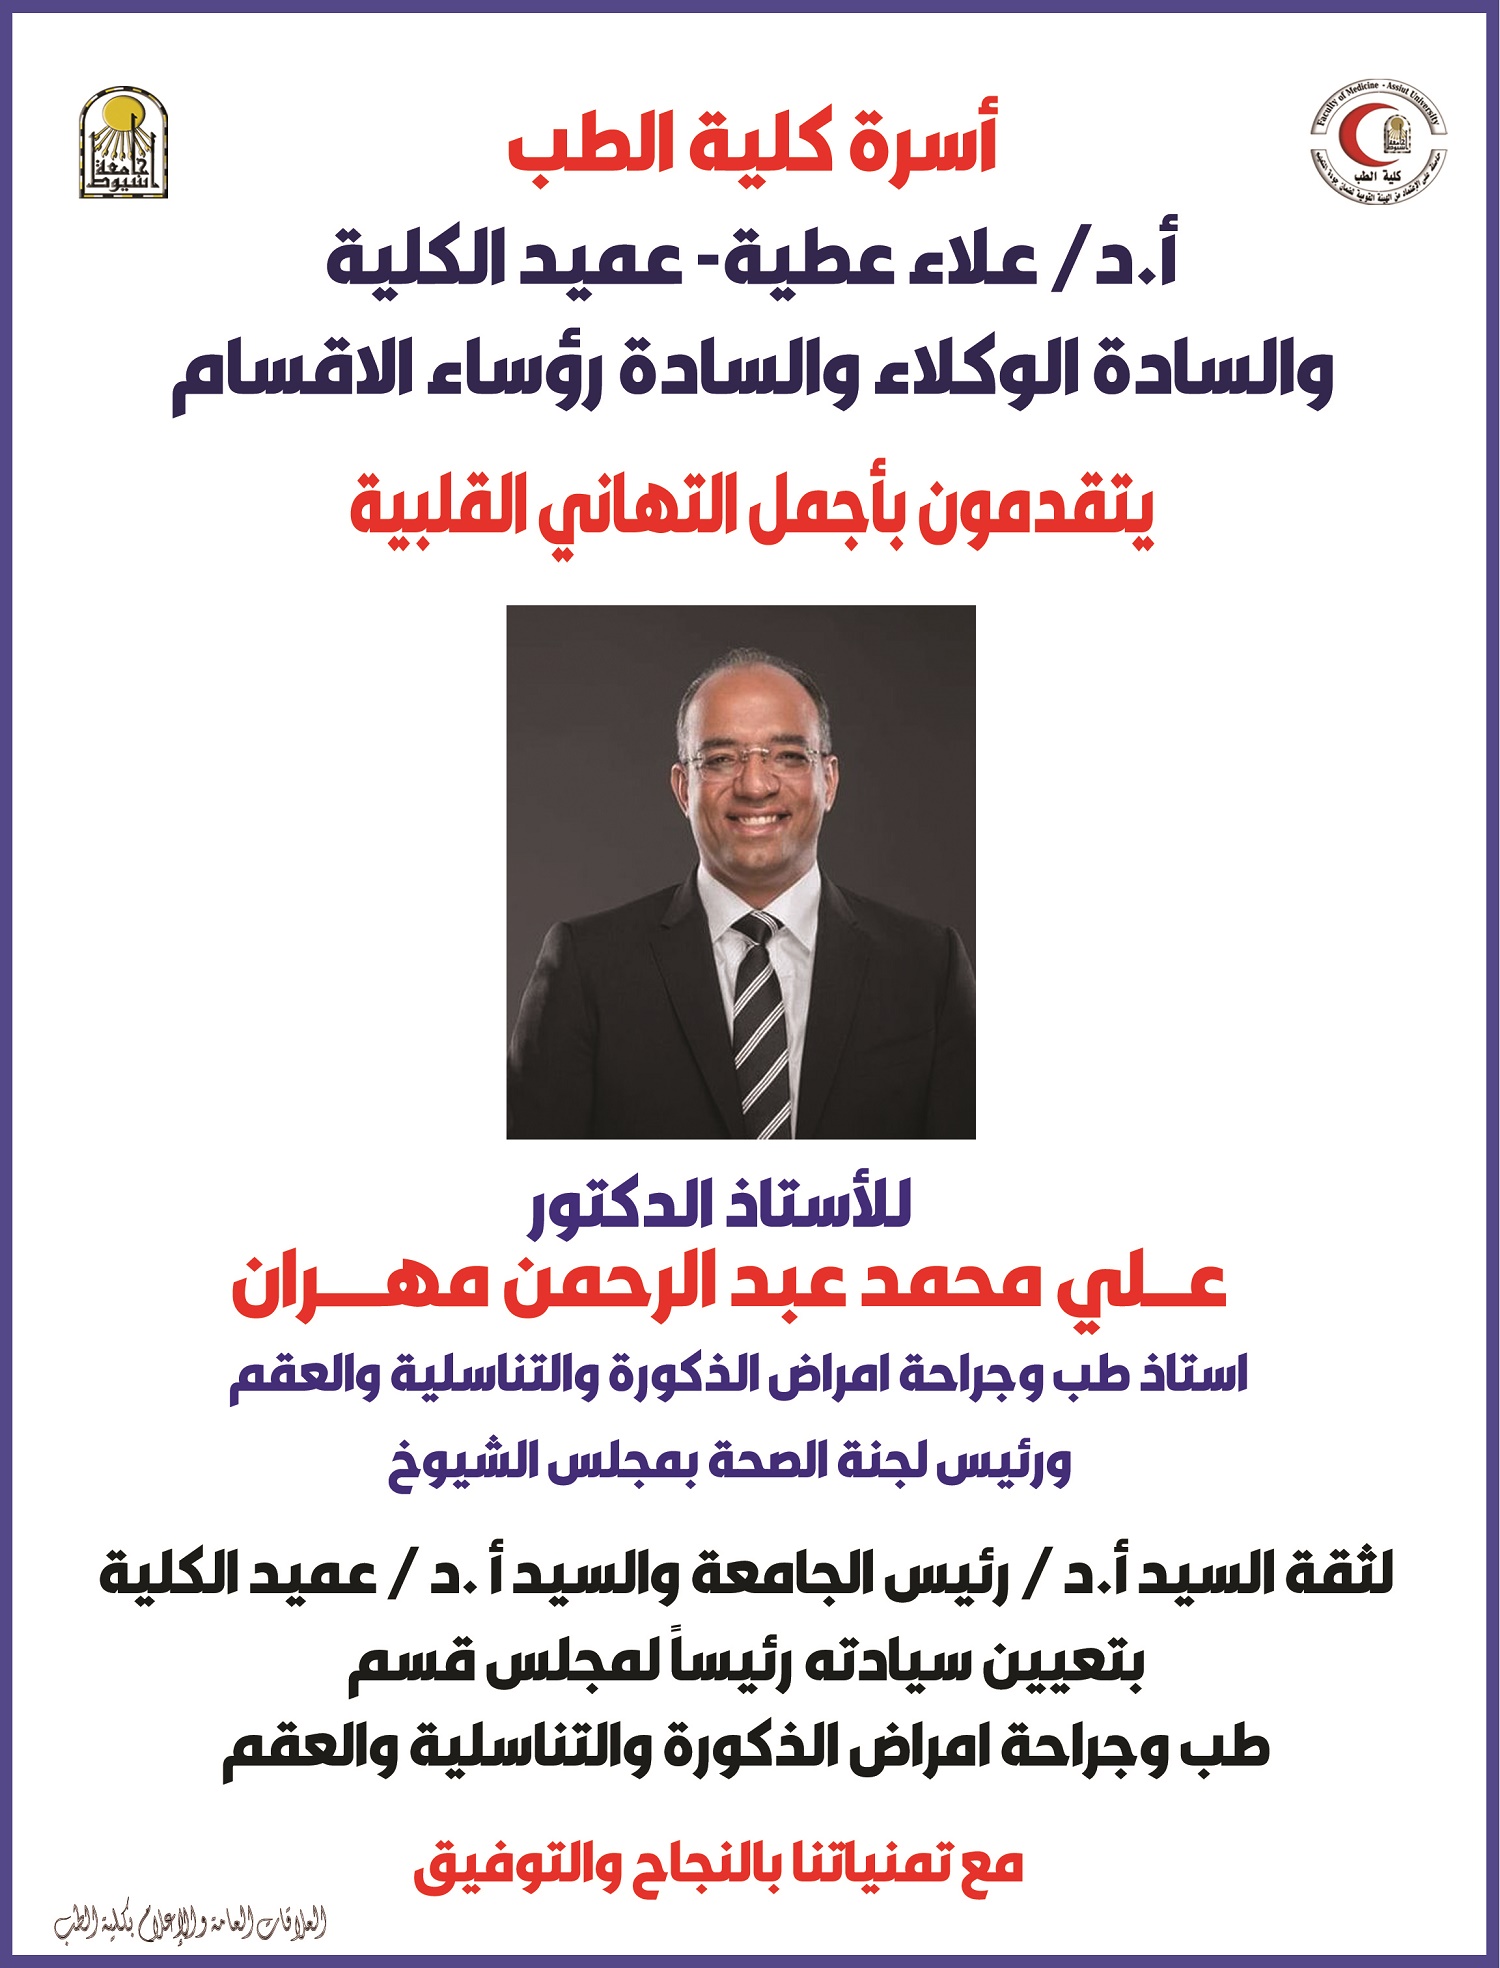 Congratulations to Mr. Professor Dr. Ali Muhammad Abdel Rahman